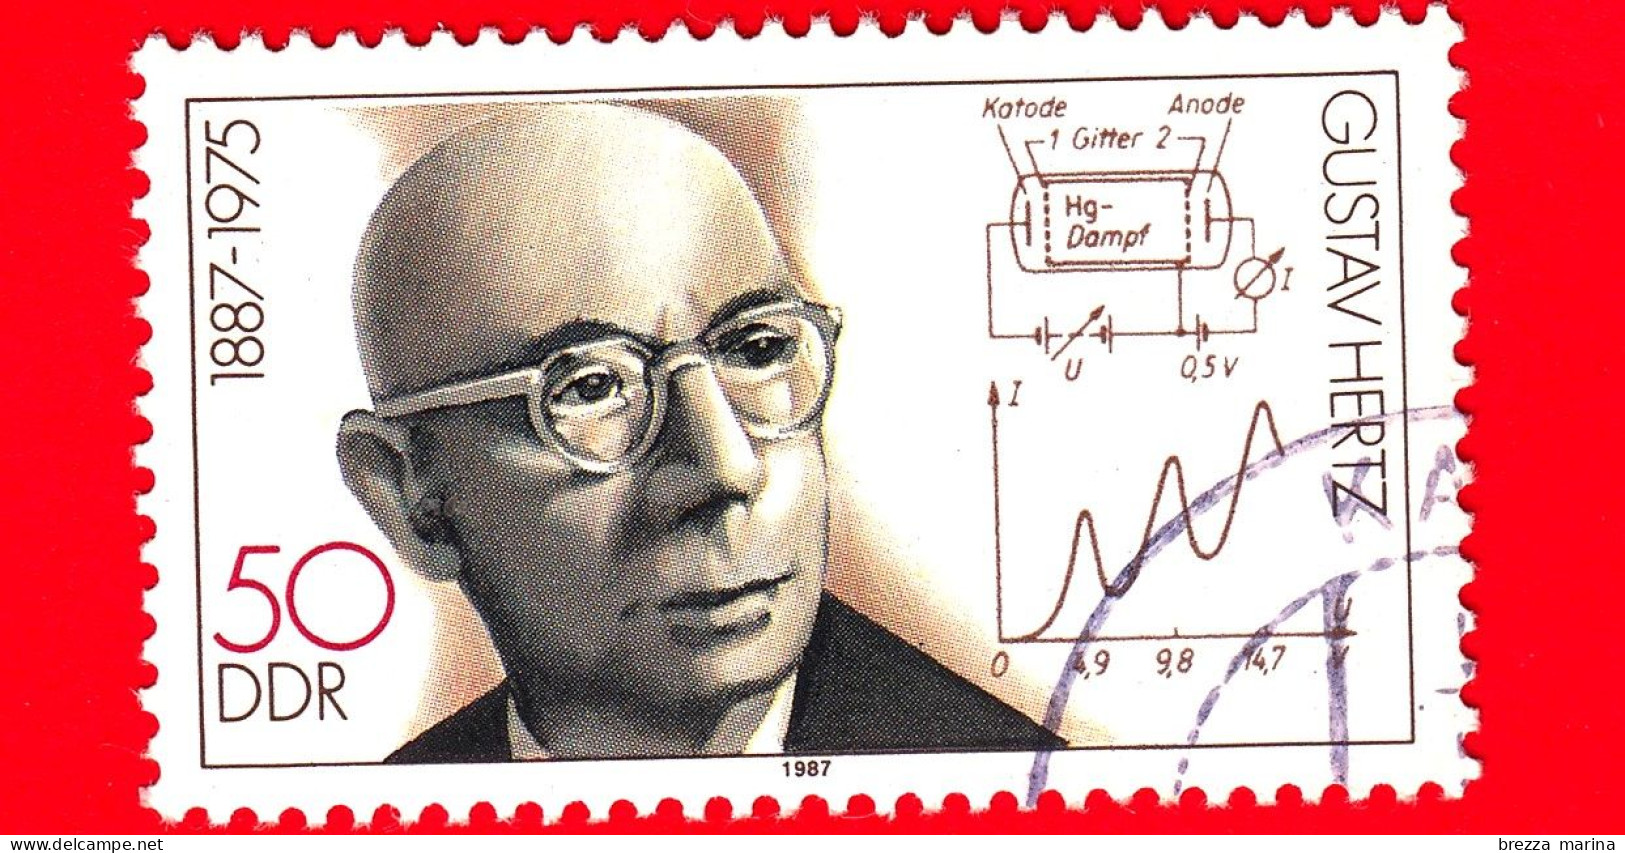 GERMANIA - DDR - Usato - 1987 - Personaggi Illustri - Gustav Hertz (1887-1975), Nobel -  50 - Used Stamps